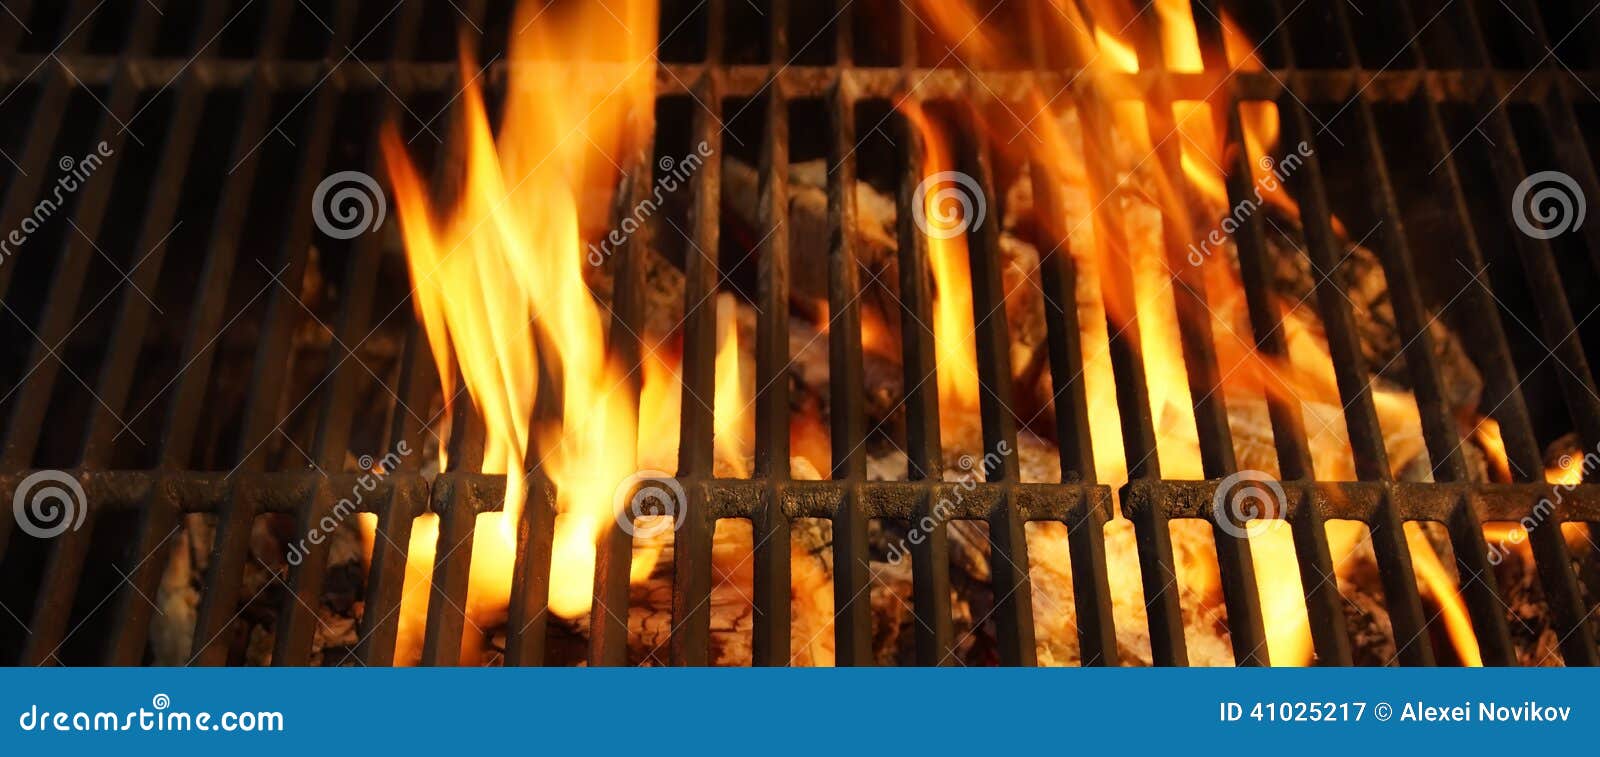 hot bbq grill, bright flames and burning coals.